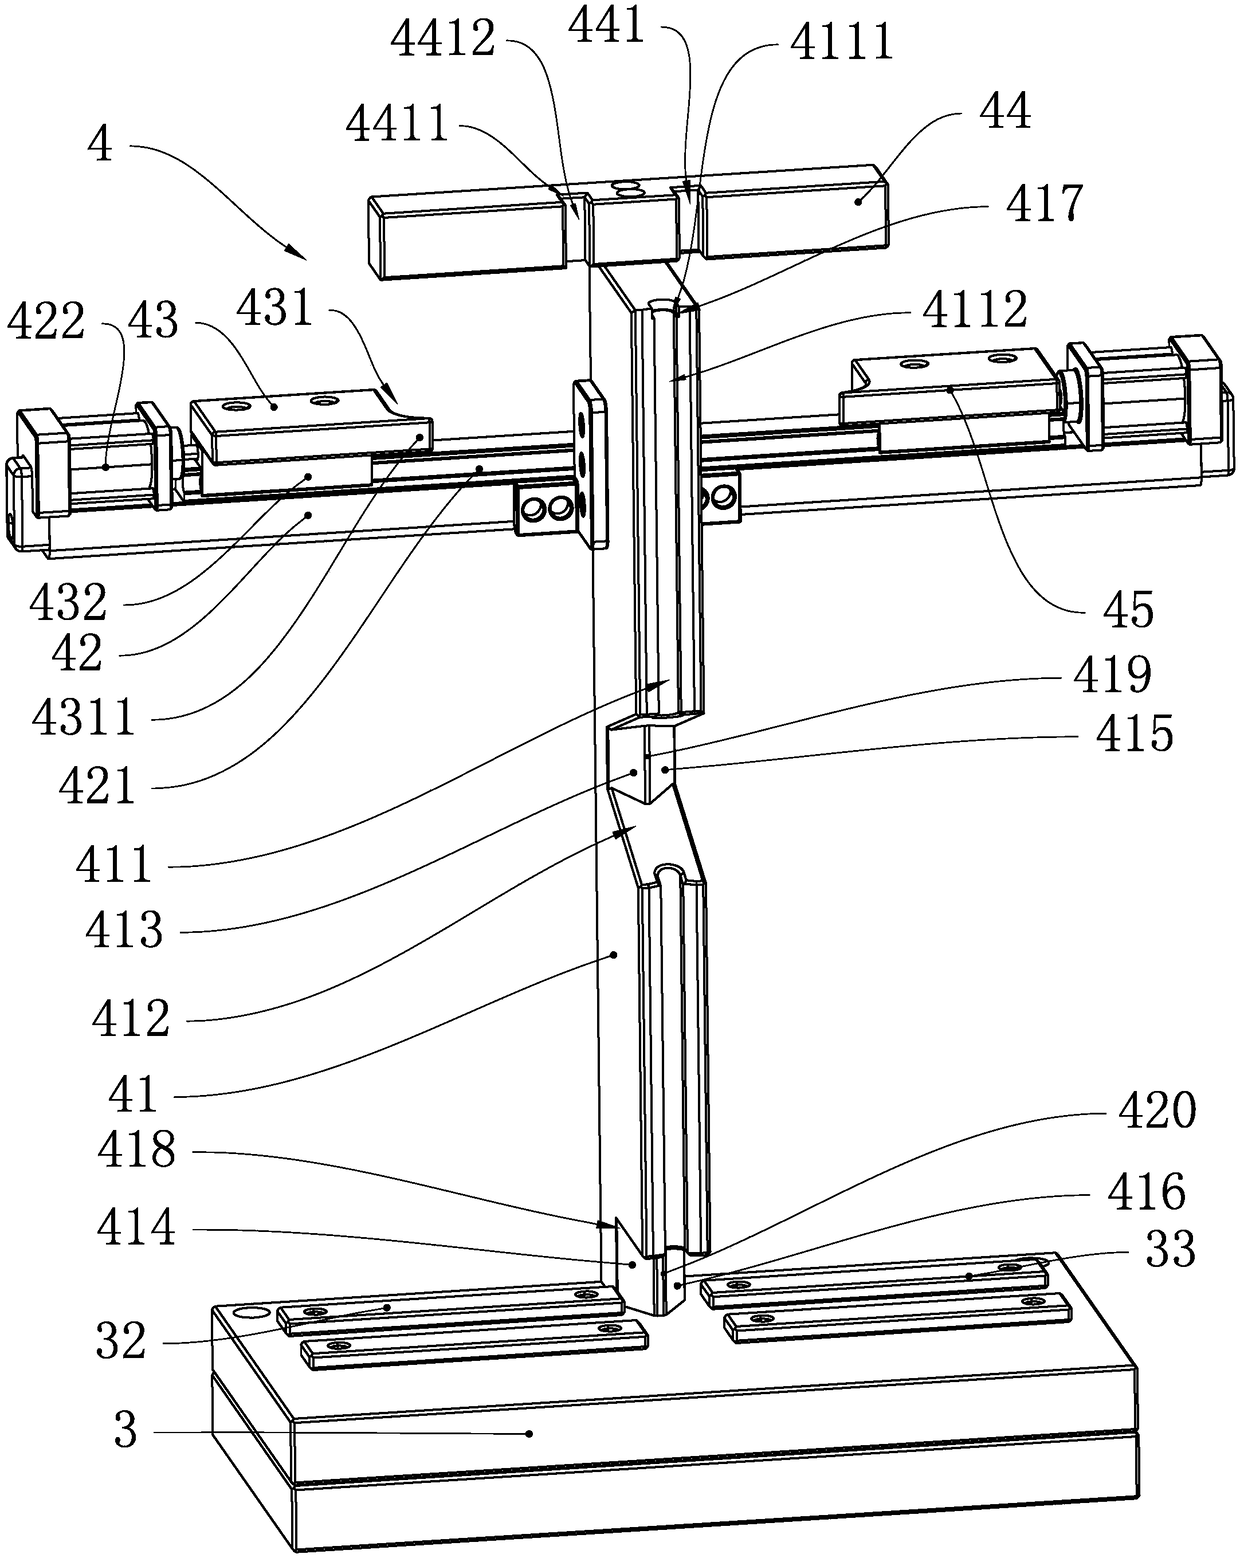 Rivet press-fitting device of paper winder